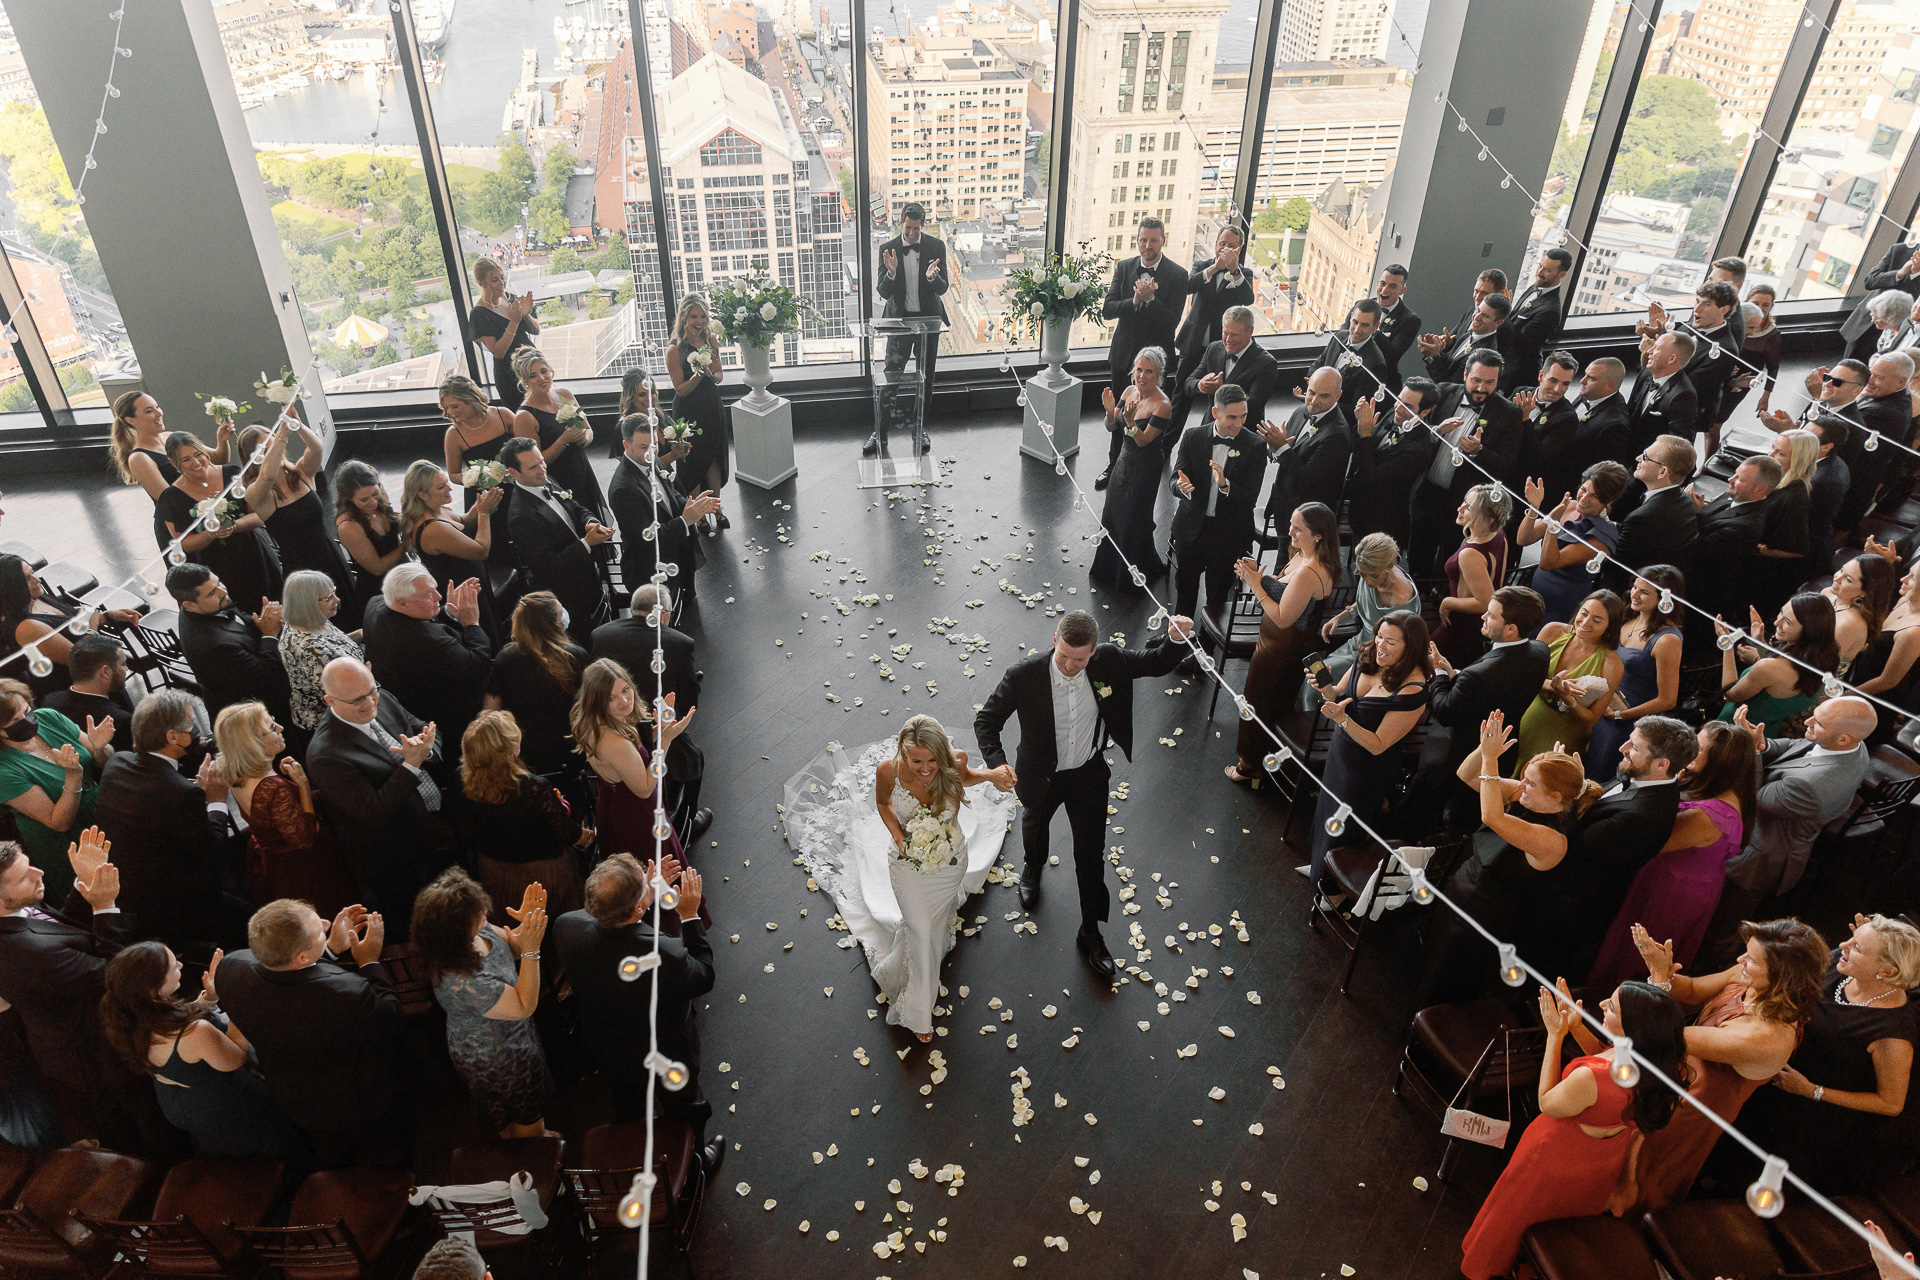 state-room-boston-wedding-photos-016